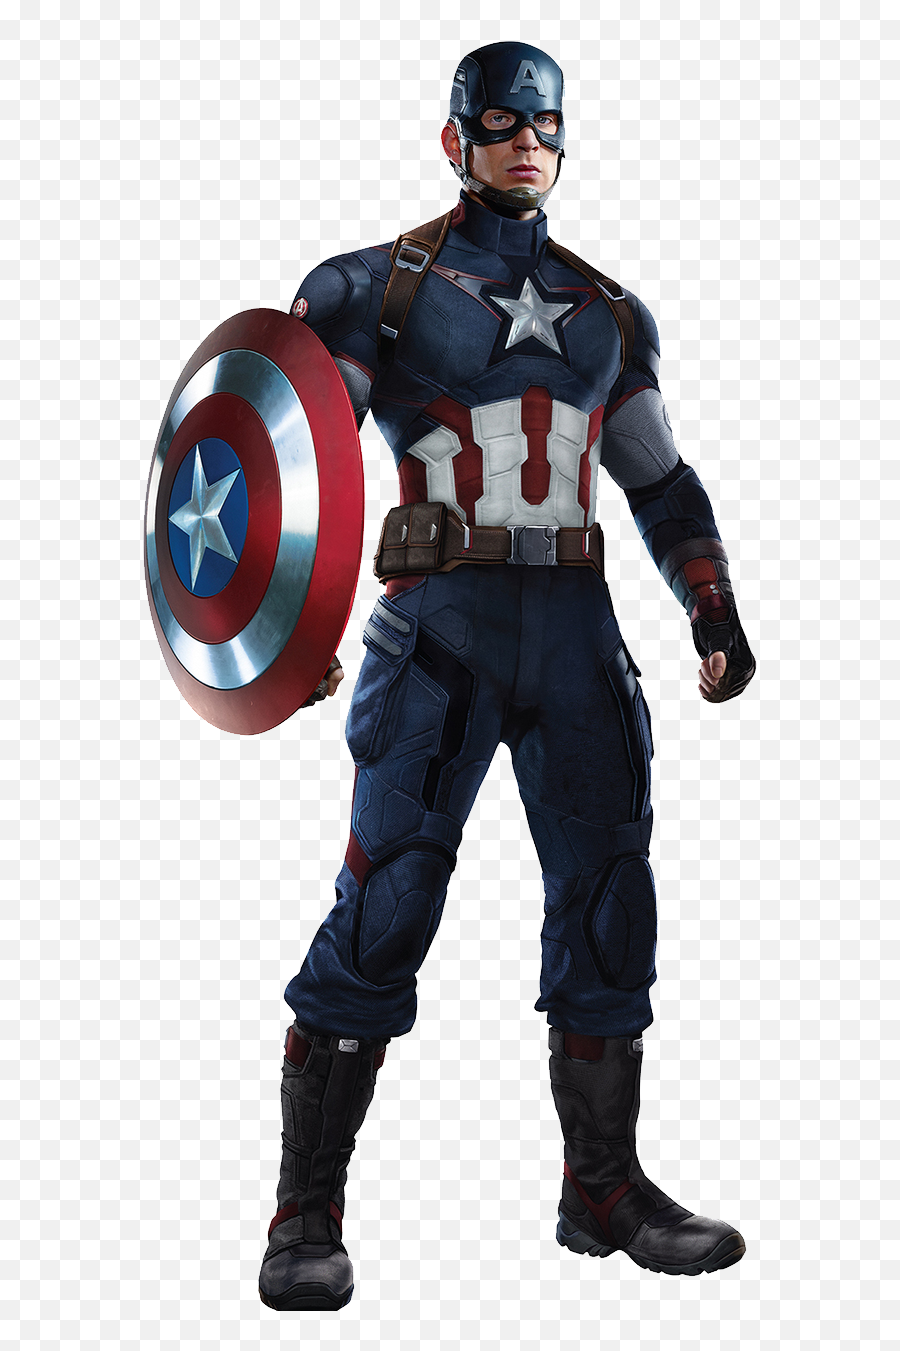 Captain America Png Image - Avengers Captain America,Chris Evans Png